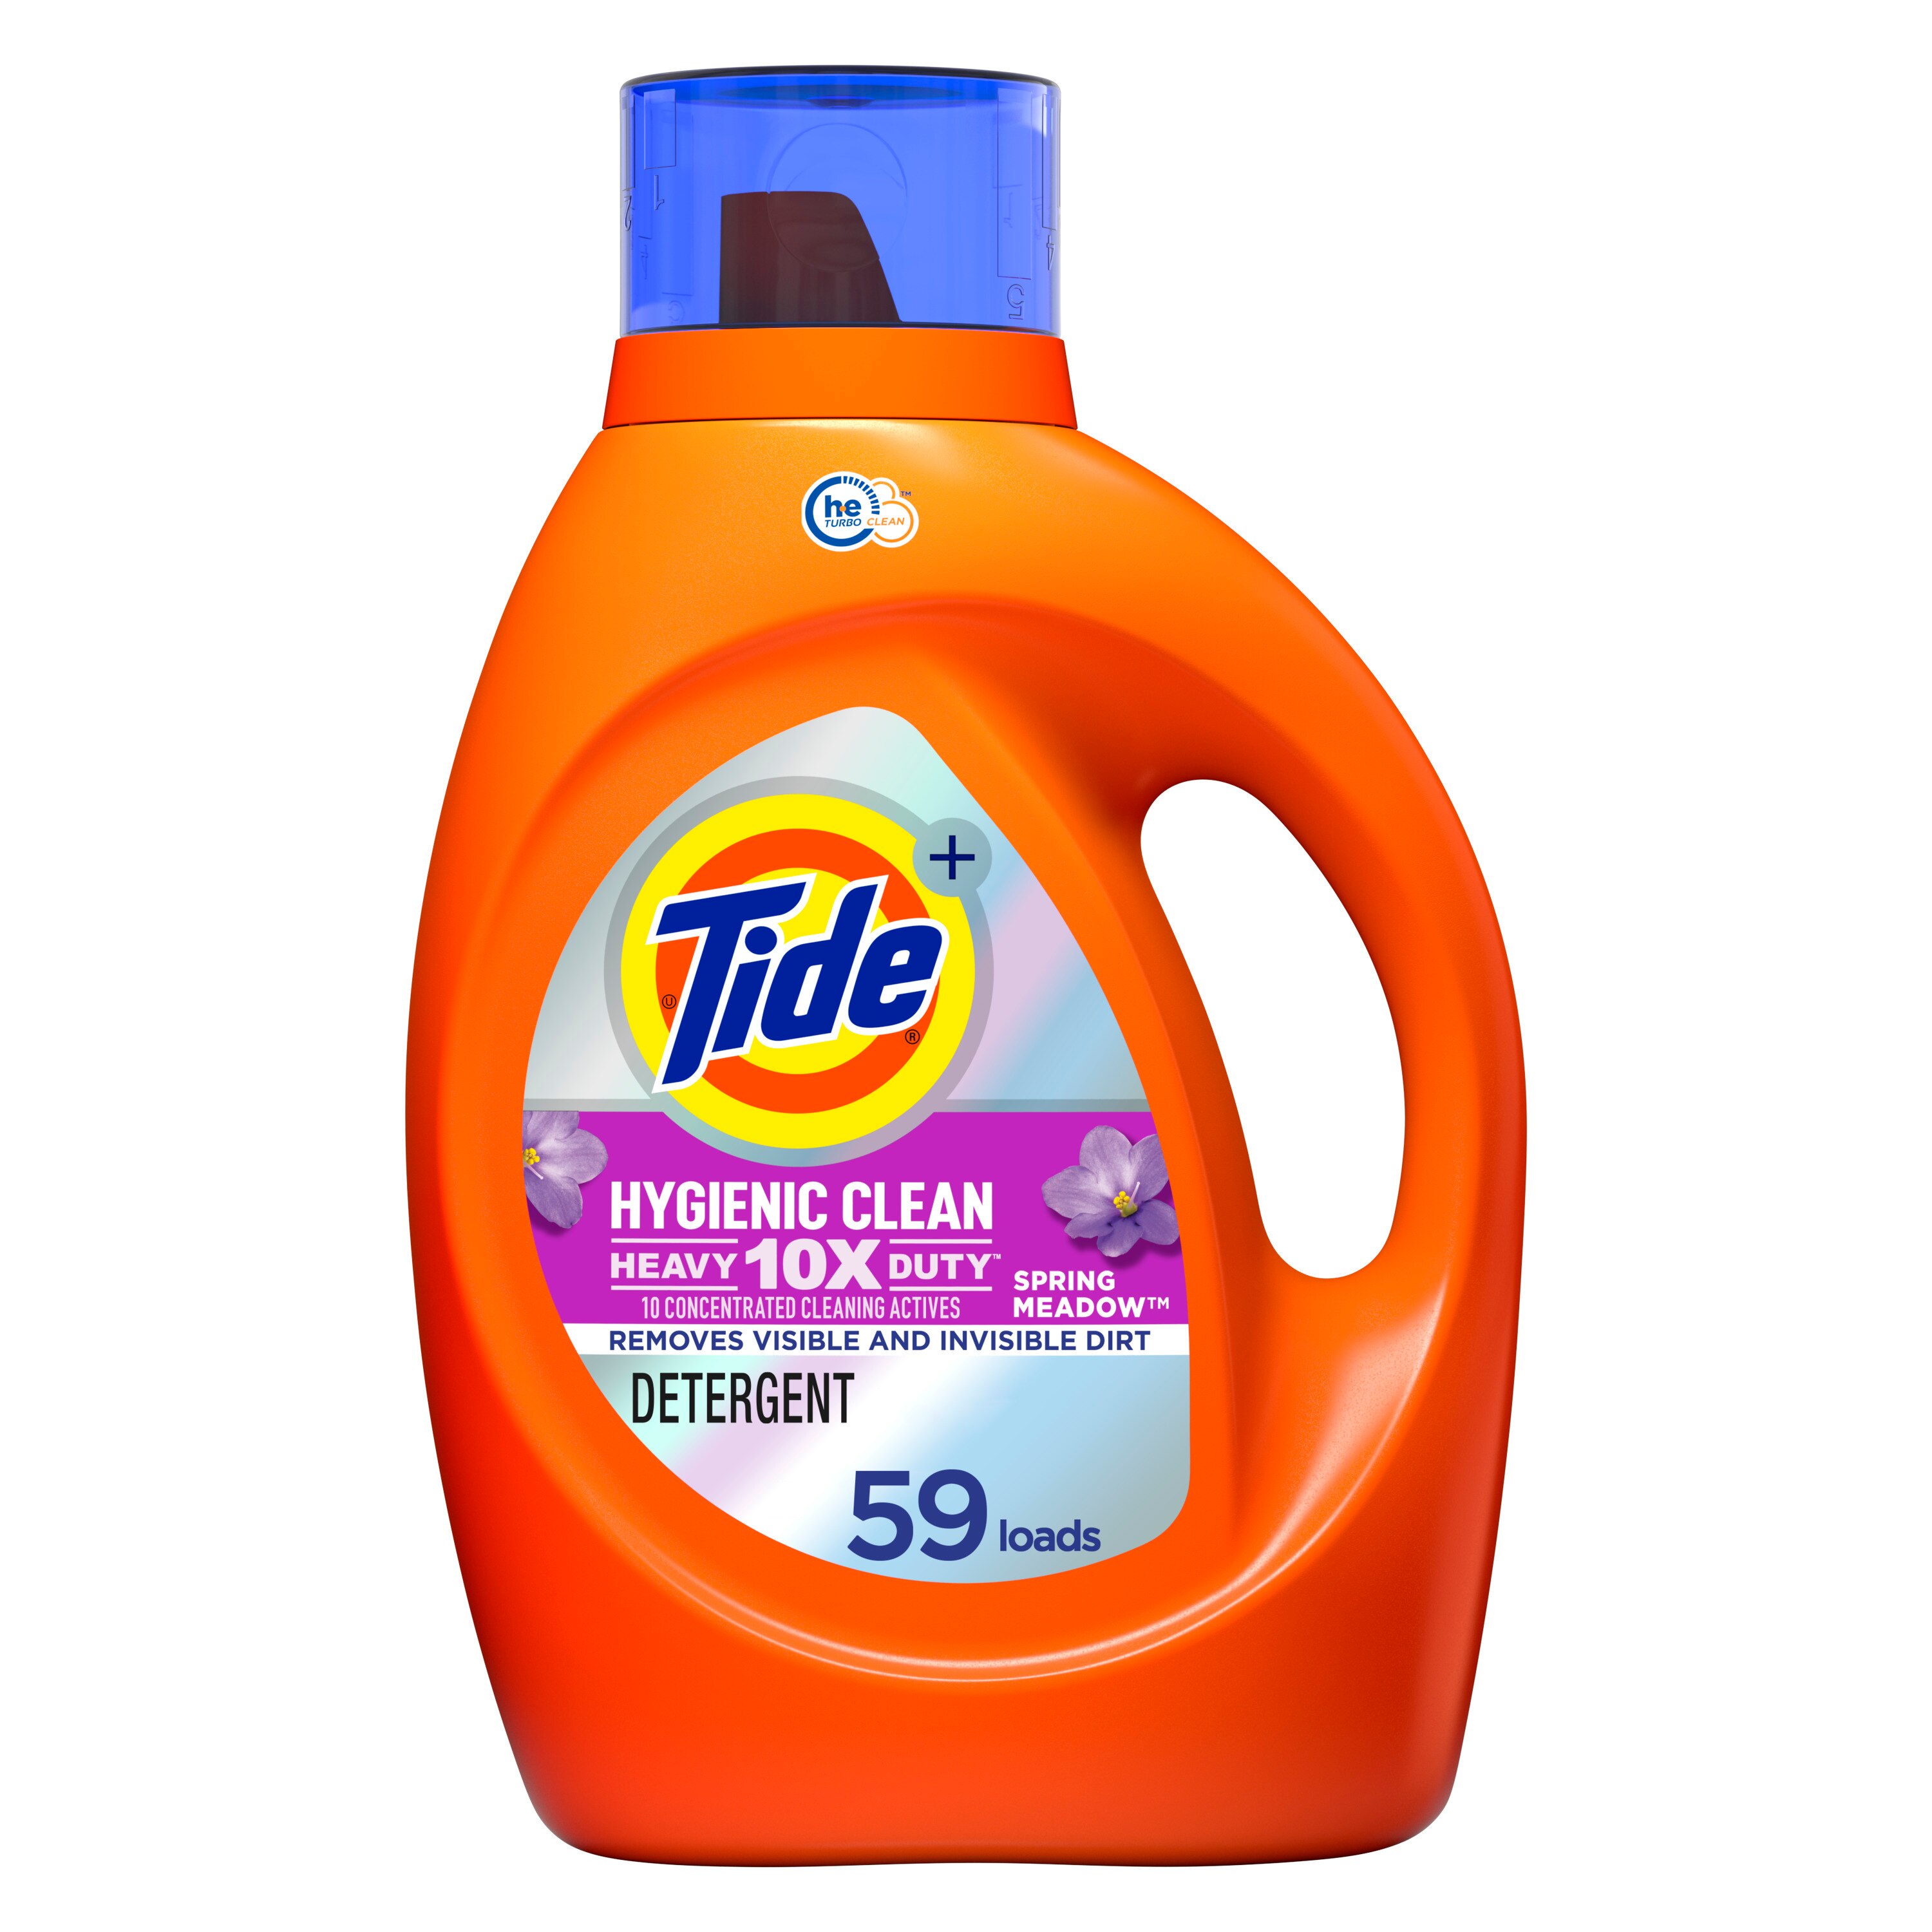 Tide Hygienic Clean Heavy 10x Duty Liquid Laundry Detergent, Spring Meadow, 59 Loads, HE Compatible, 92 OZ